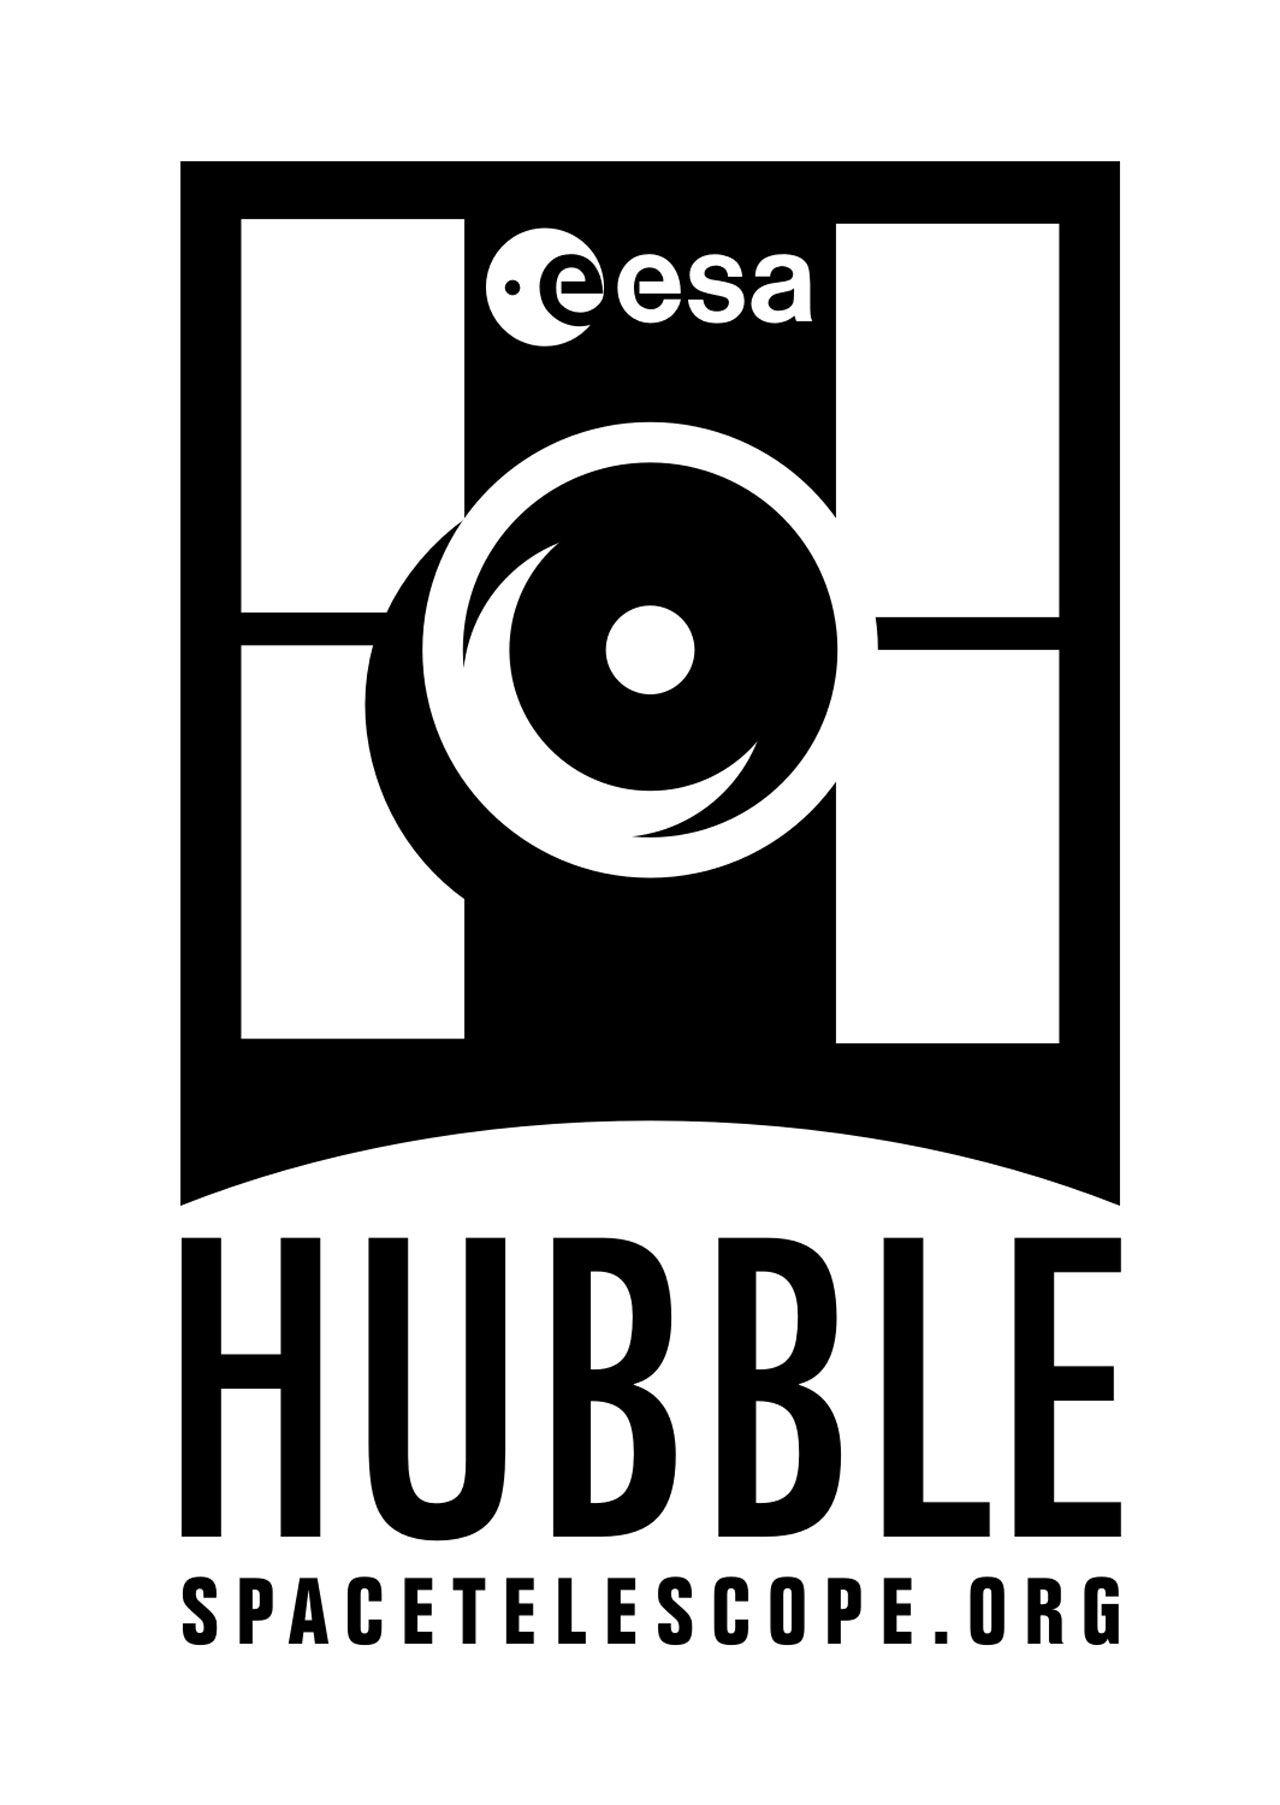 European Space Agency Logo - Hubble European Space Agency Information Centre - general logo | ESA ...